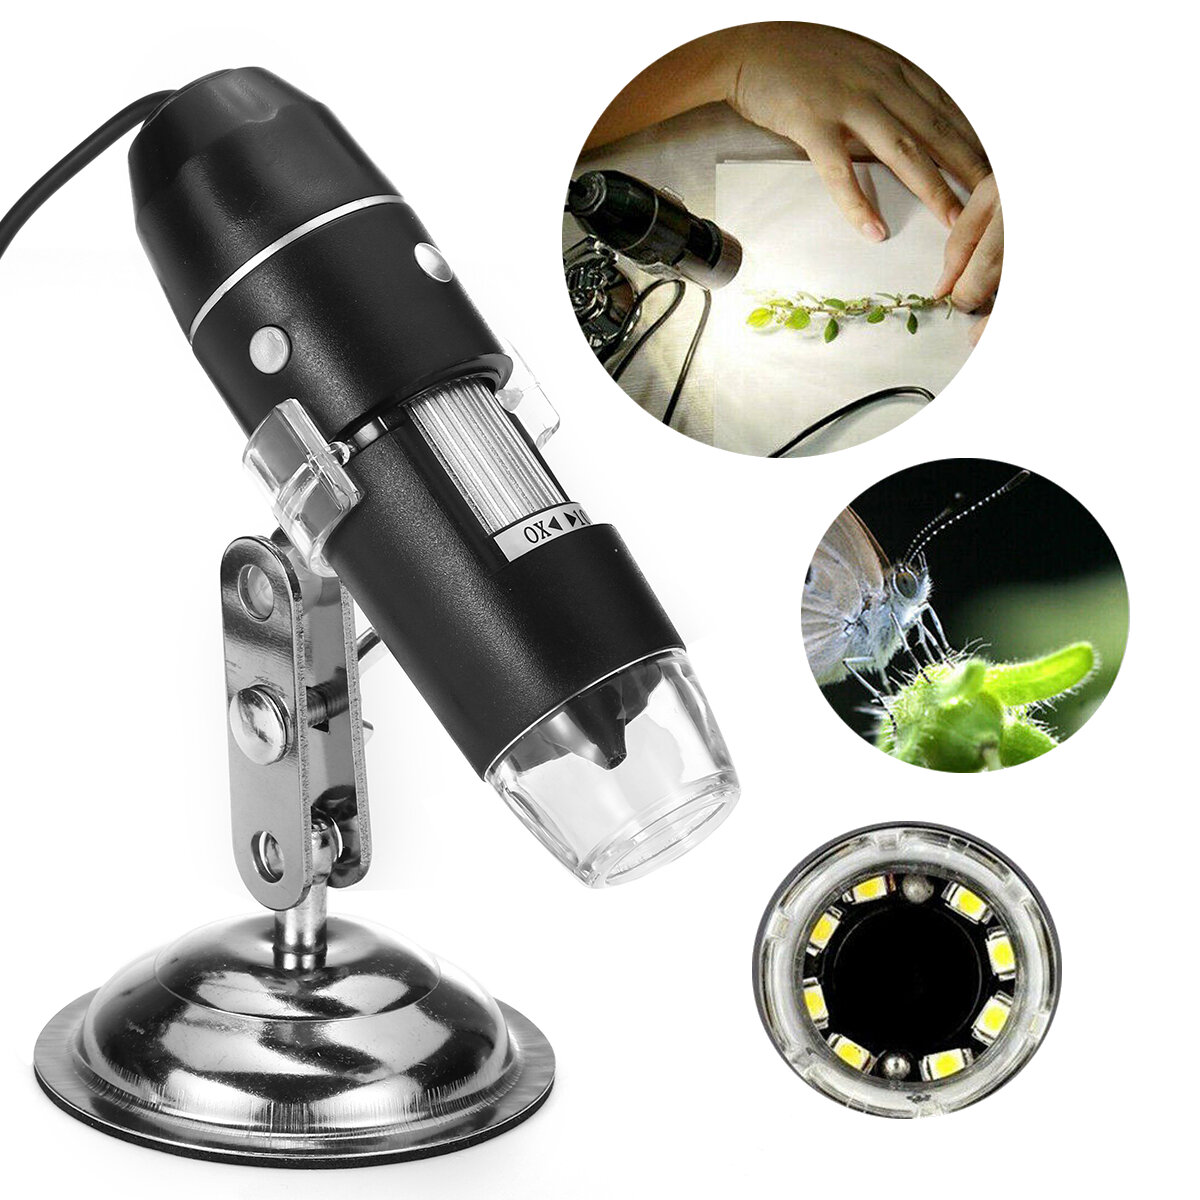 1000X 8LED 2MP USB Zoom Microscope Digital Magnifier HD Endoscopic Camera Video